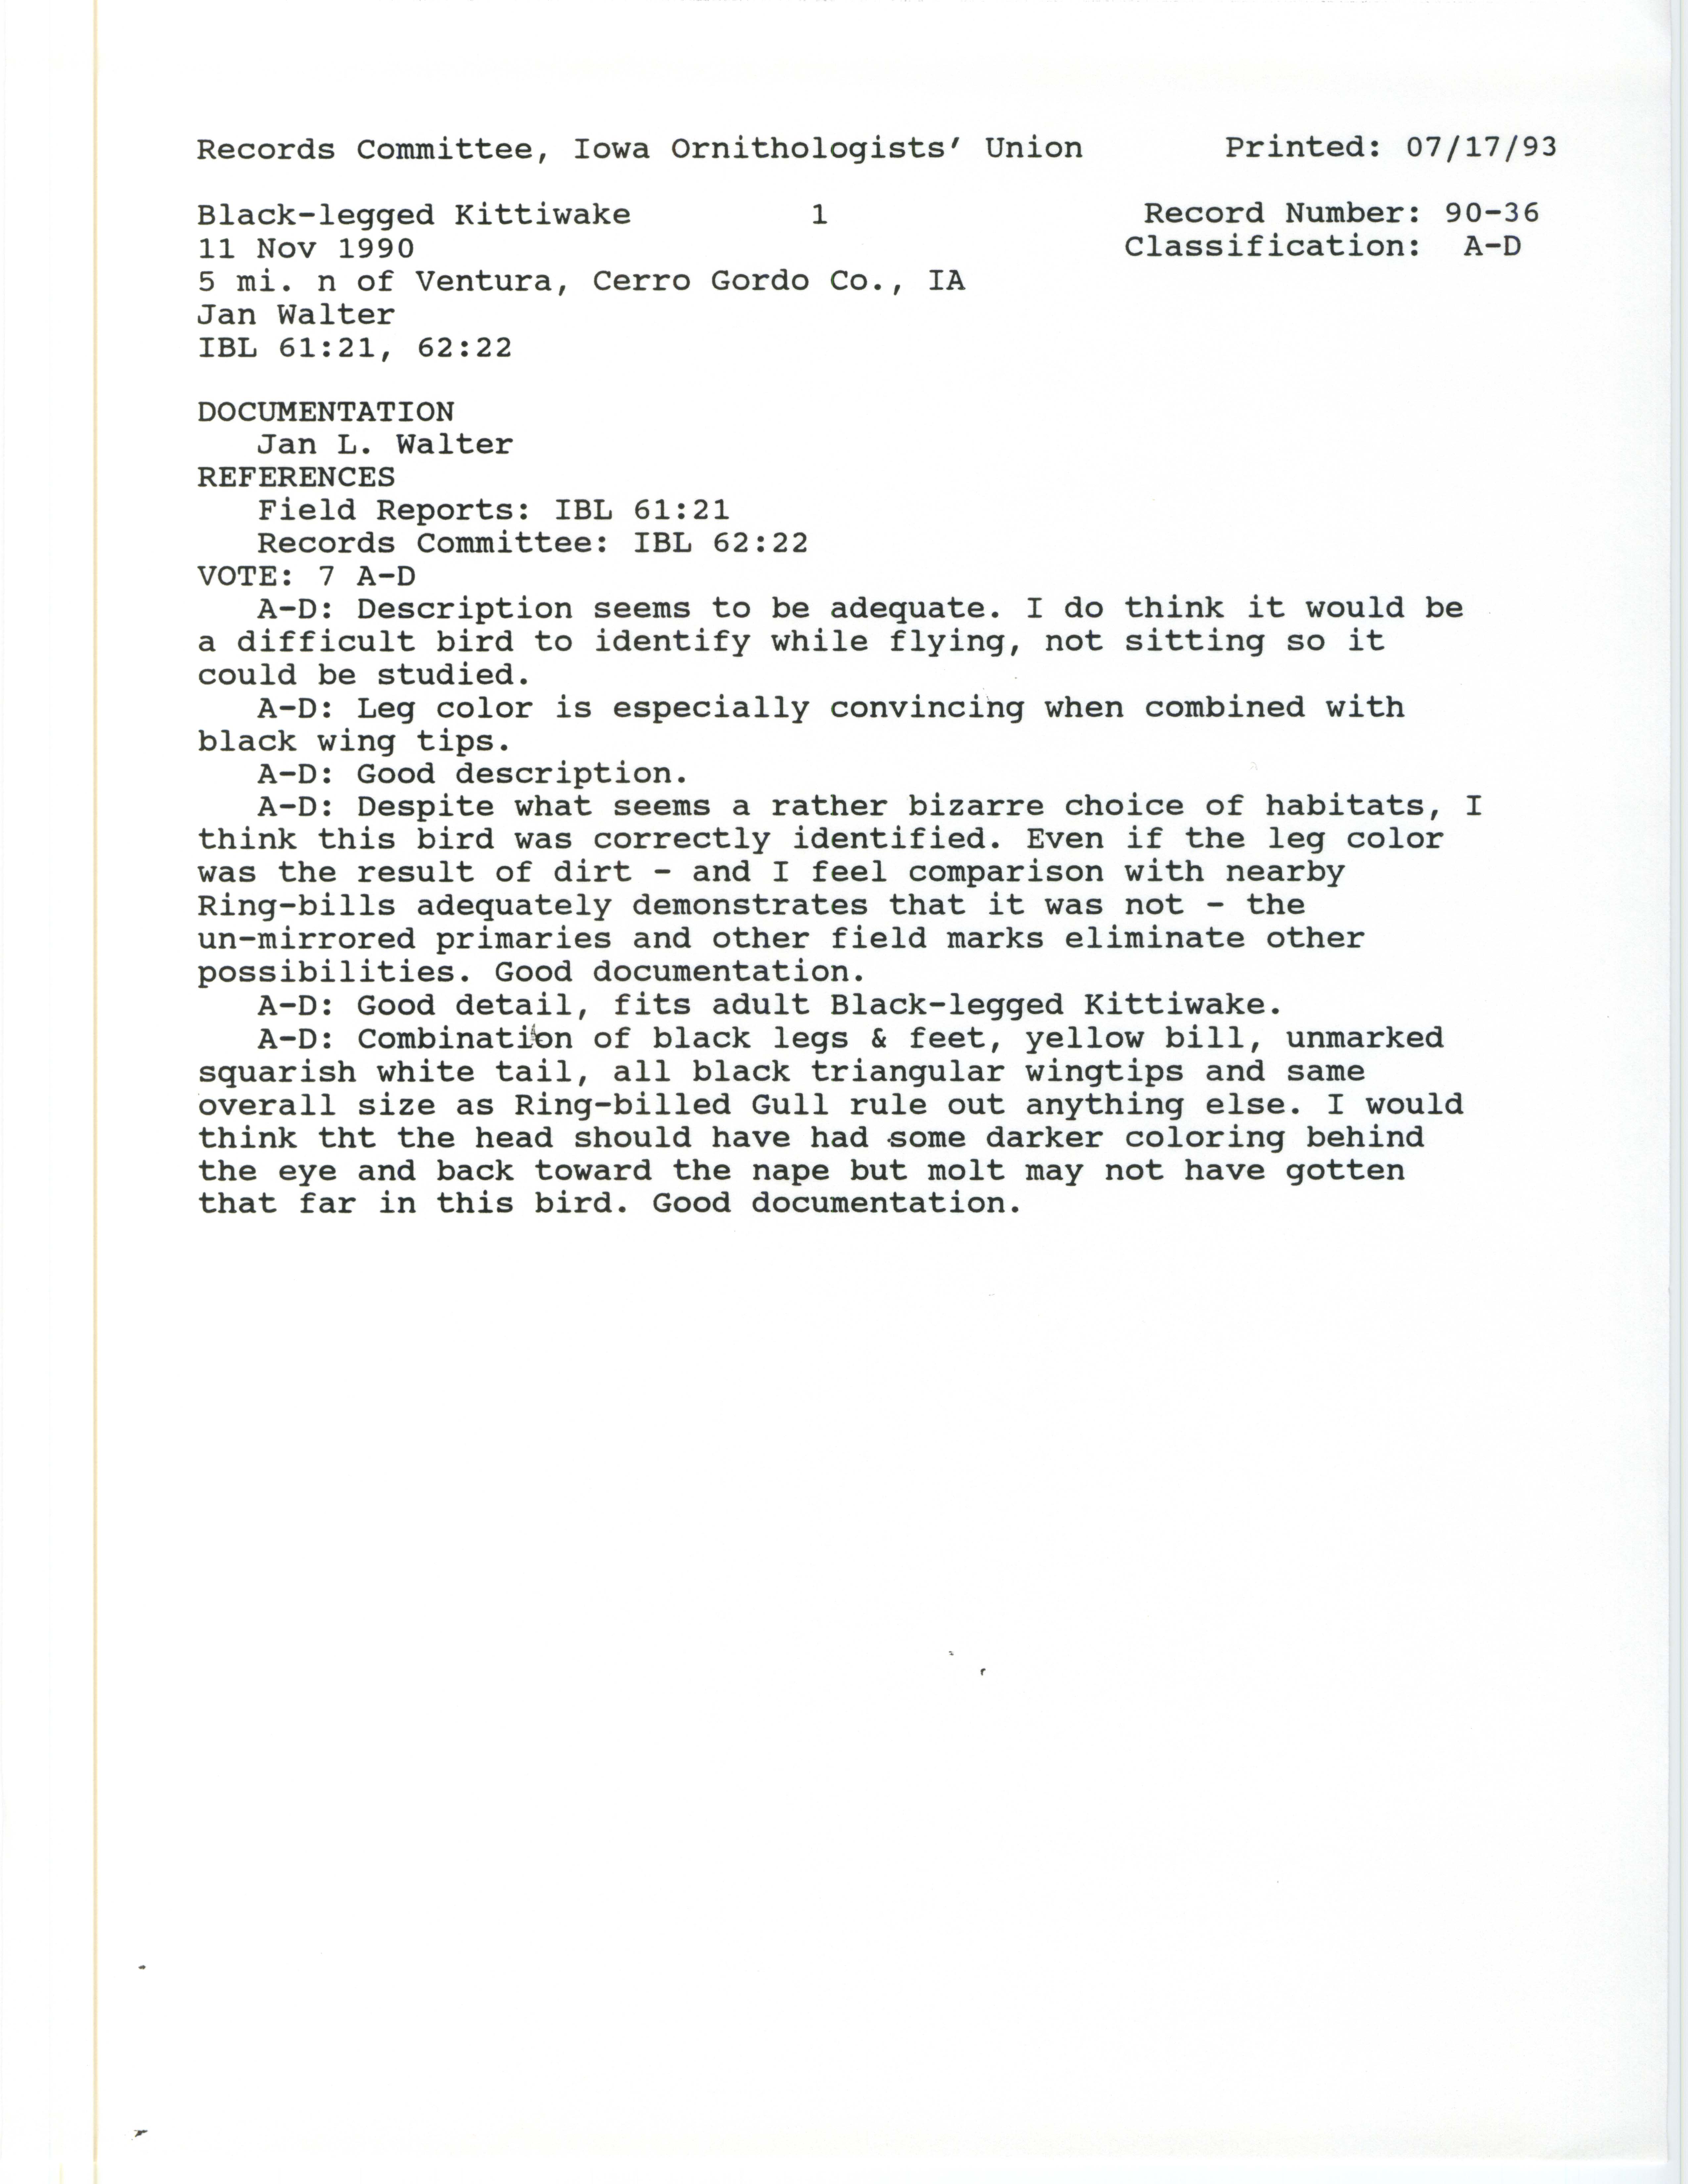 Records Committee review for rare bird sighting of Black-legged Kittiwake north of Ventura, 1990